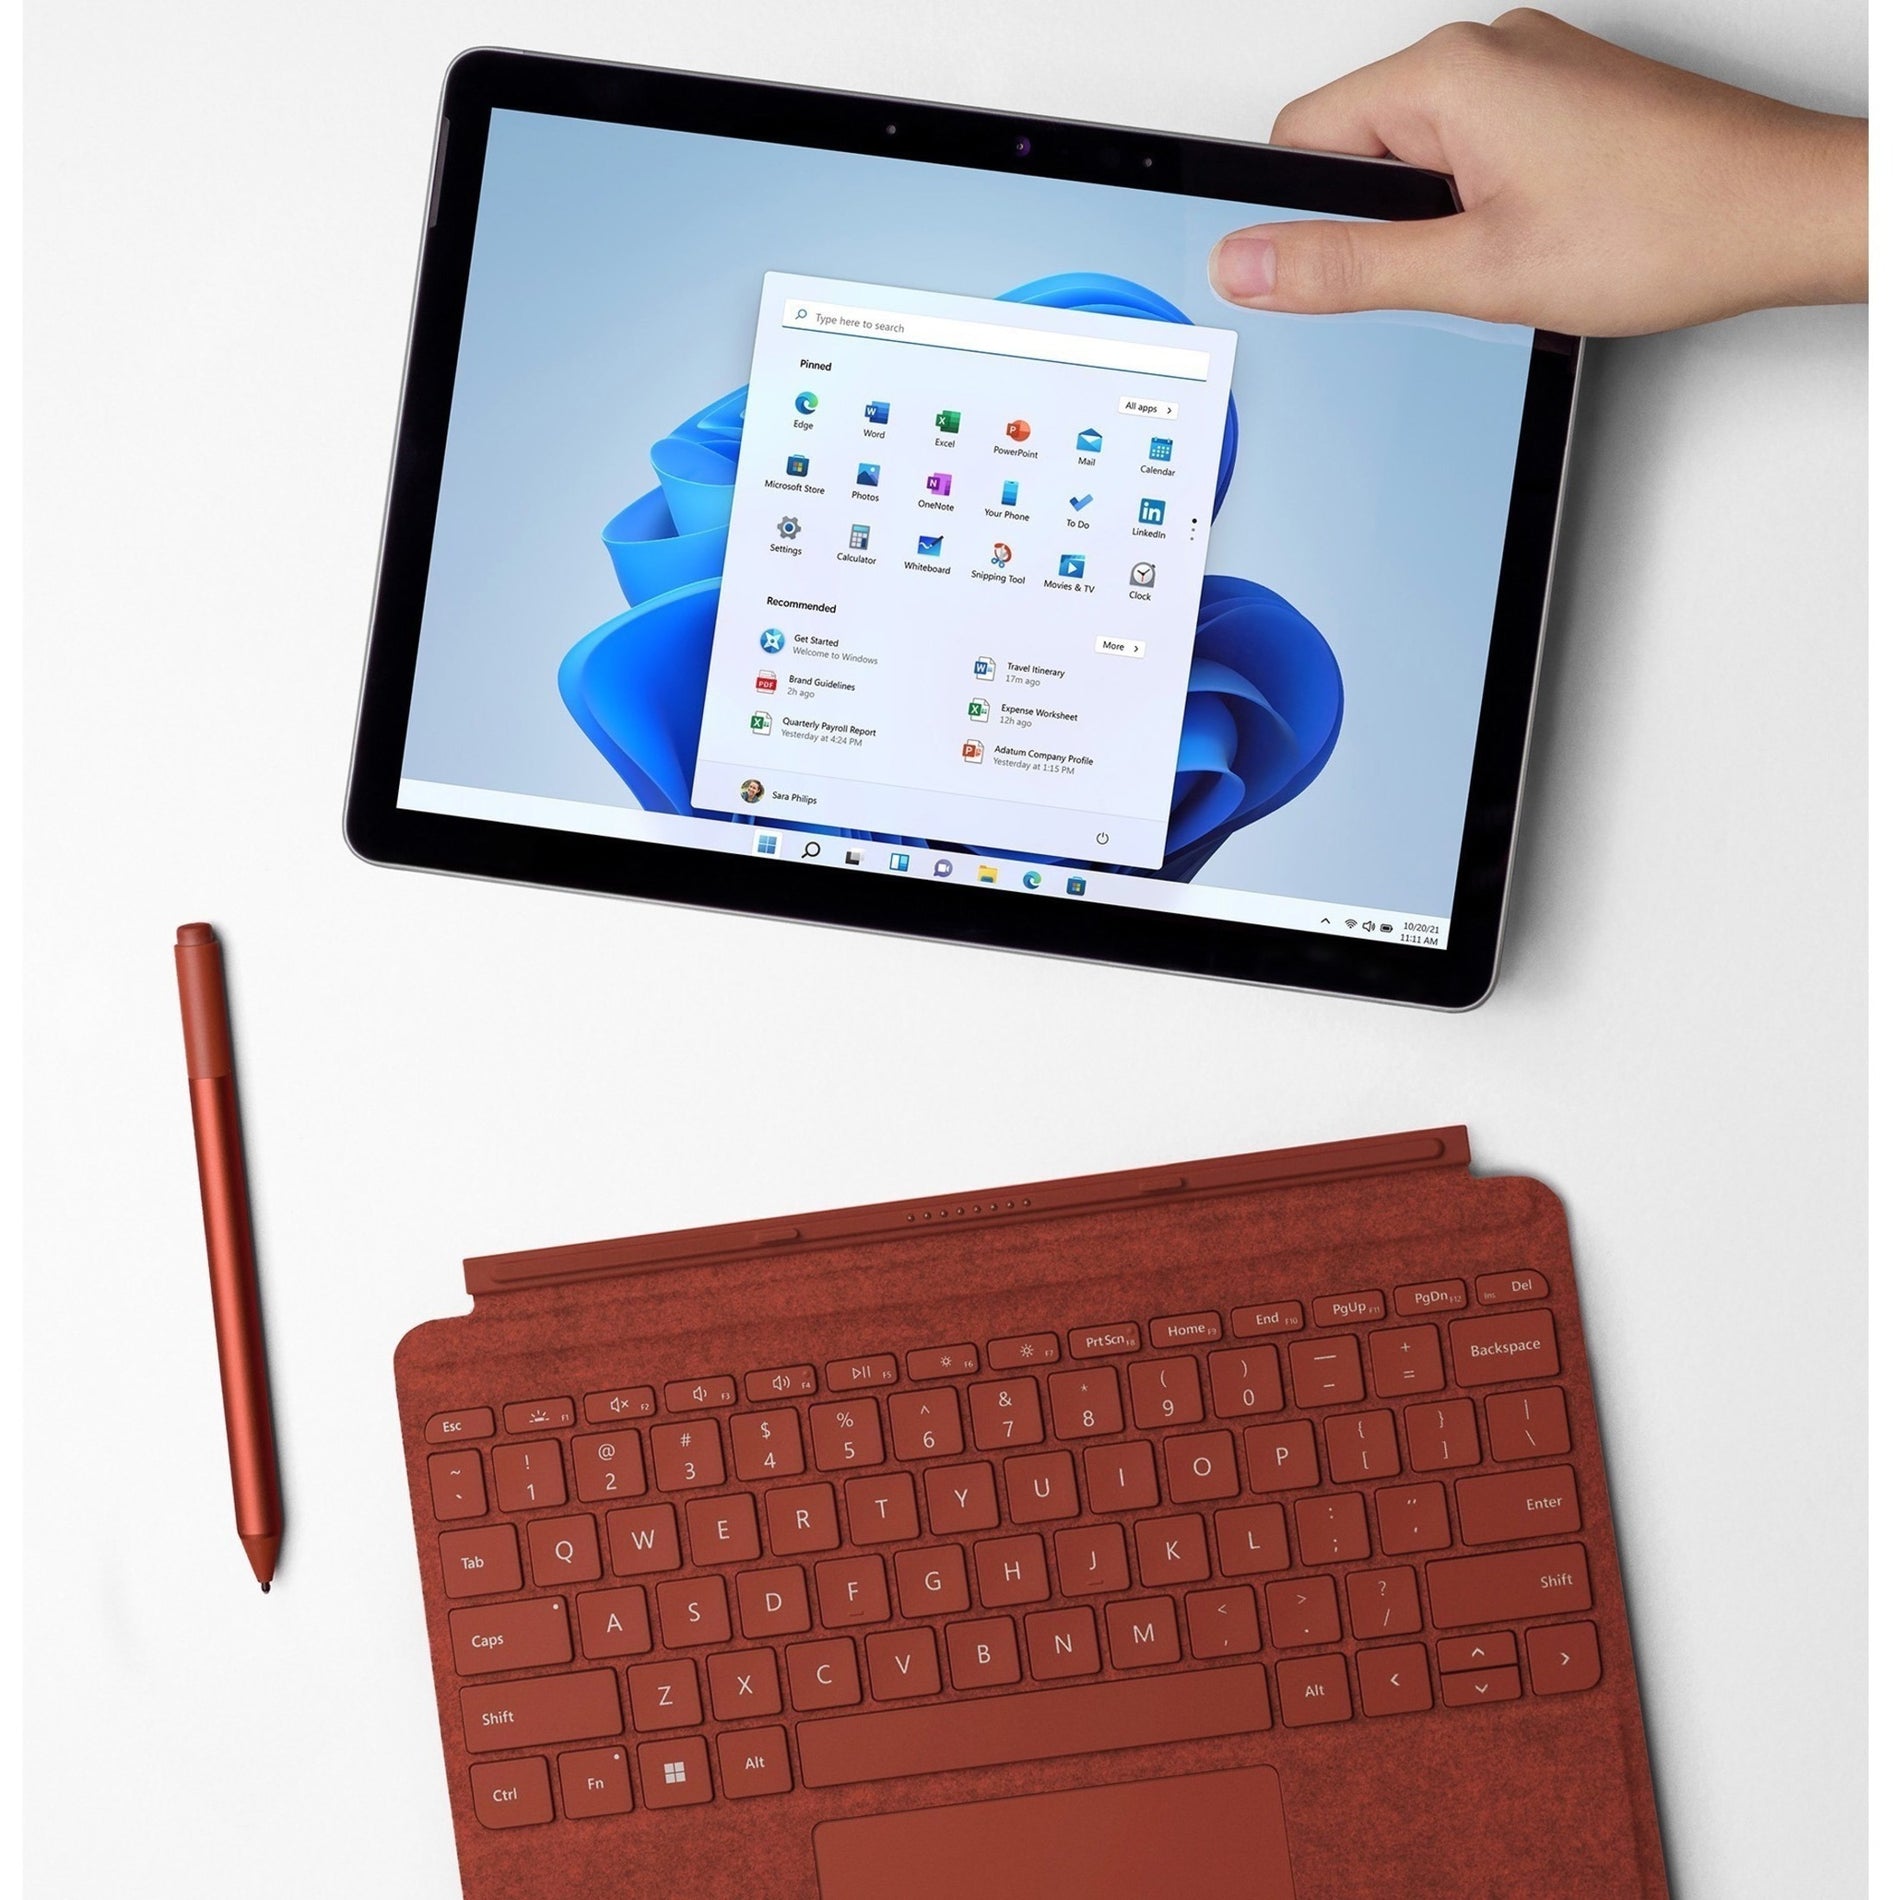 Microsoft 8VD-00047 Surface Go 3 Tablet, 10.5", 8GB RAM, 128GB SSD, Windows 10 Pro